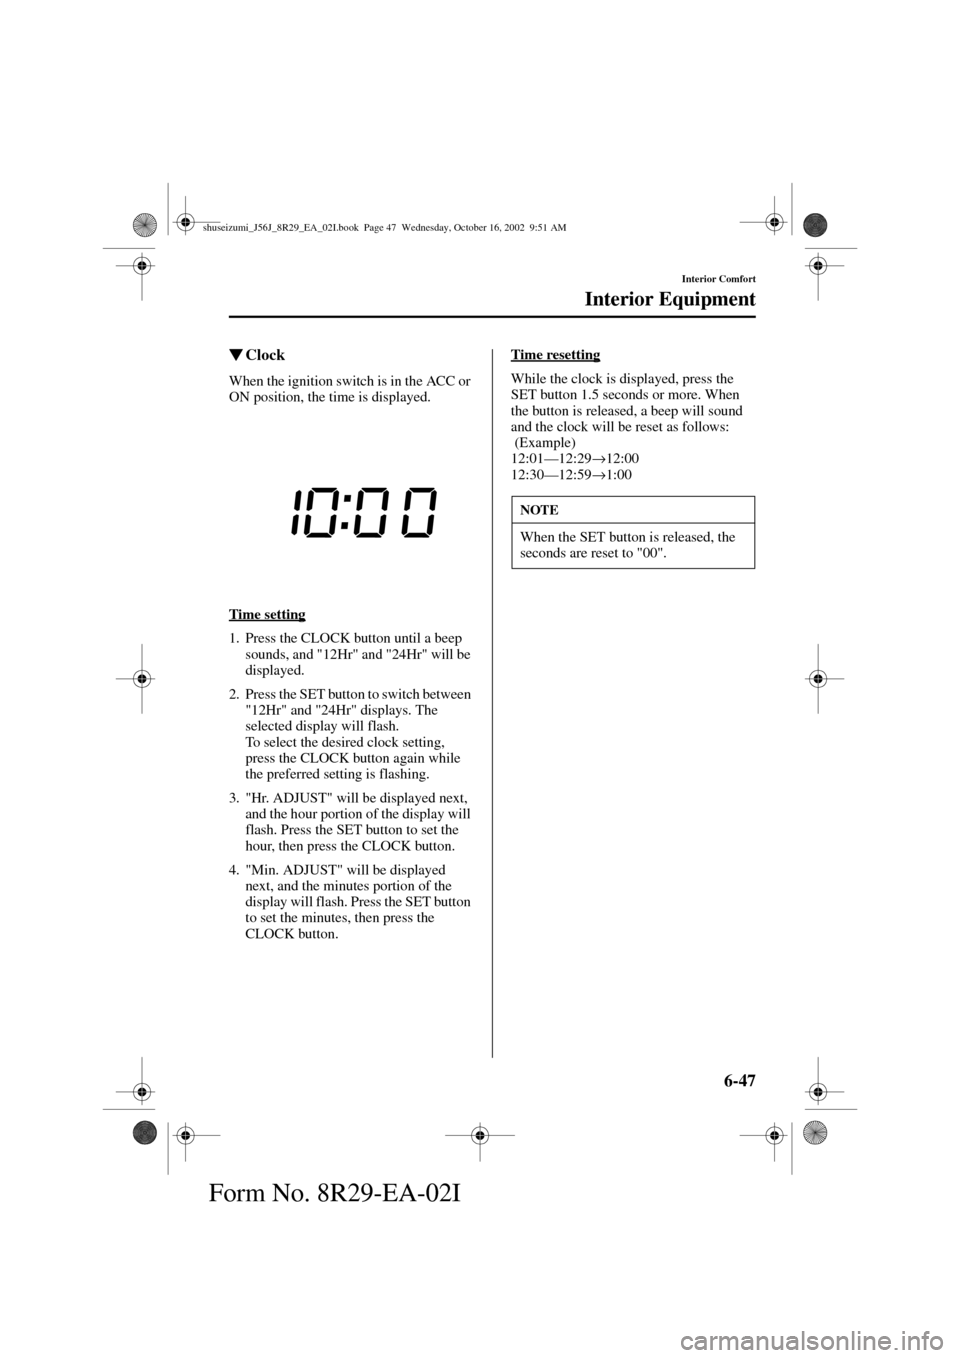 MAZDA MODEL 6 2003  Owners Manual (in English) 6-47
Interior Comfort
Interior Equipment
Form No. 8R29-EA-02I
Clock
When the ignition switch is in the ACC or 
ON position, the time is displayed.
Time setting
1. Press the CLOCK button until a beep 